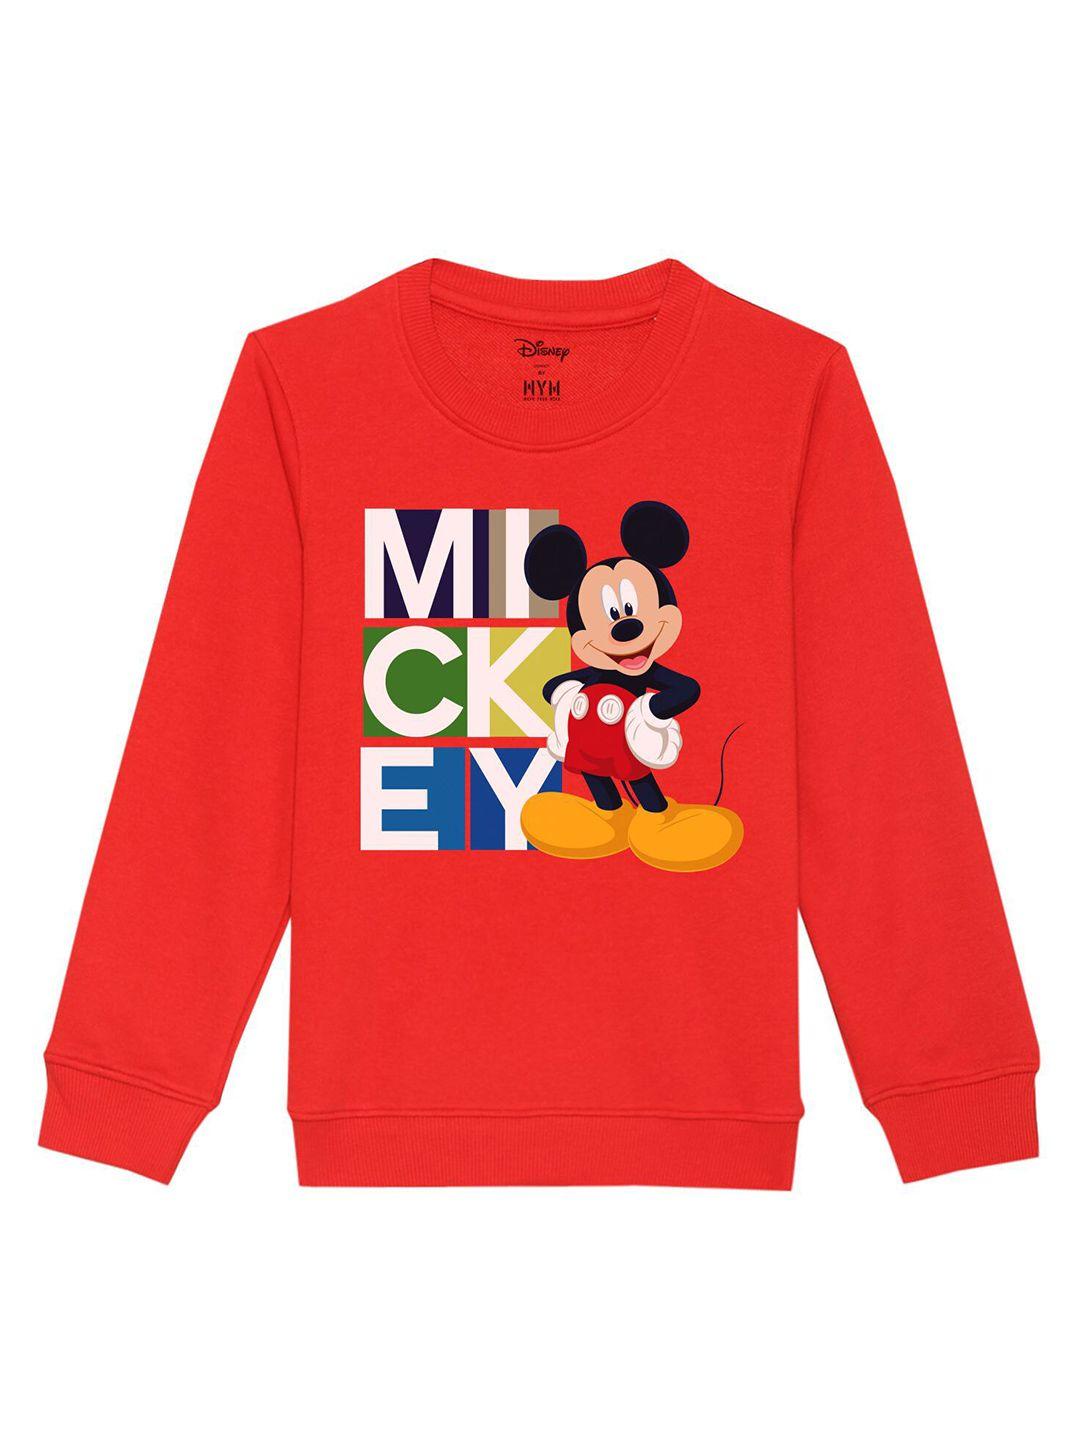 disney by wear your mind kids red printed sweatshirt